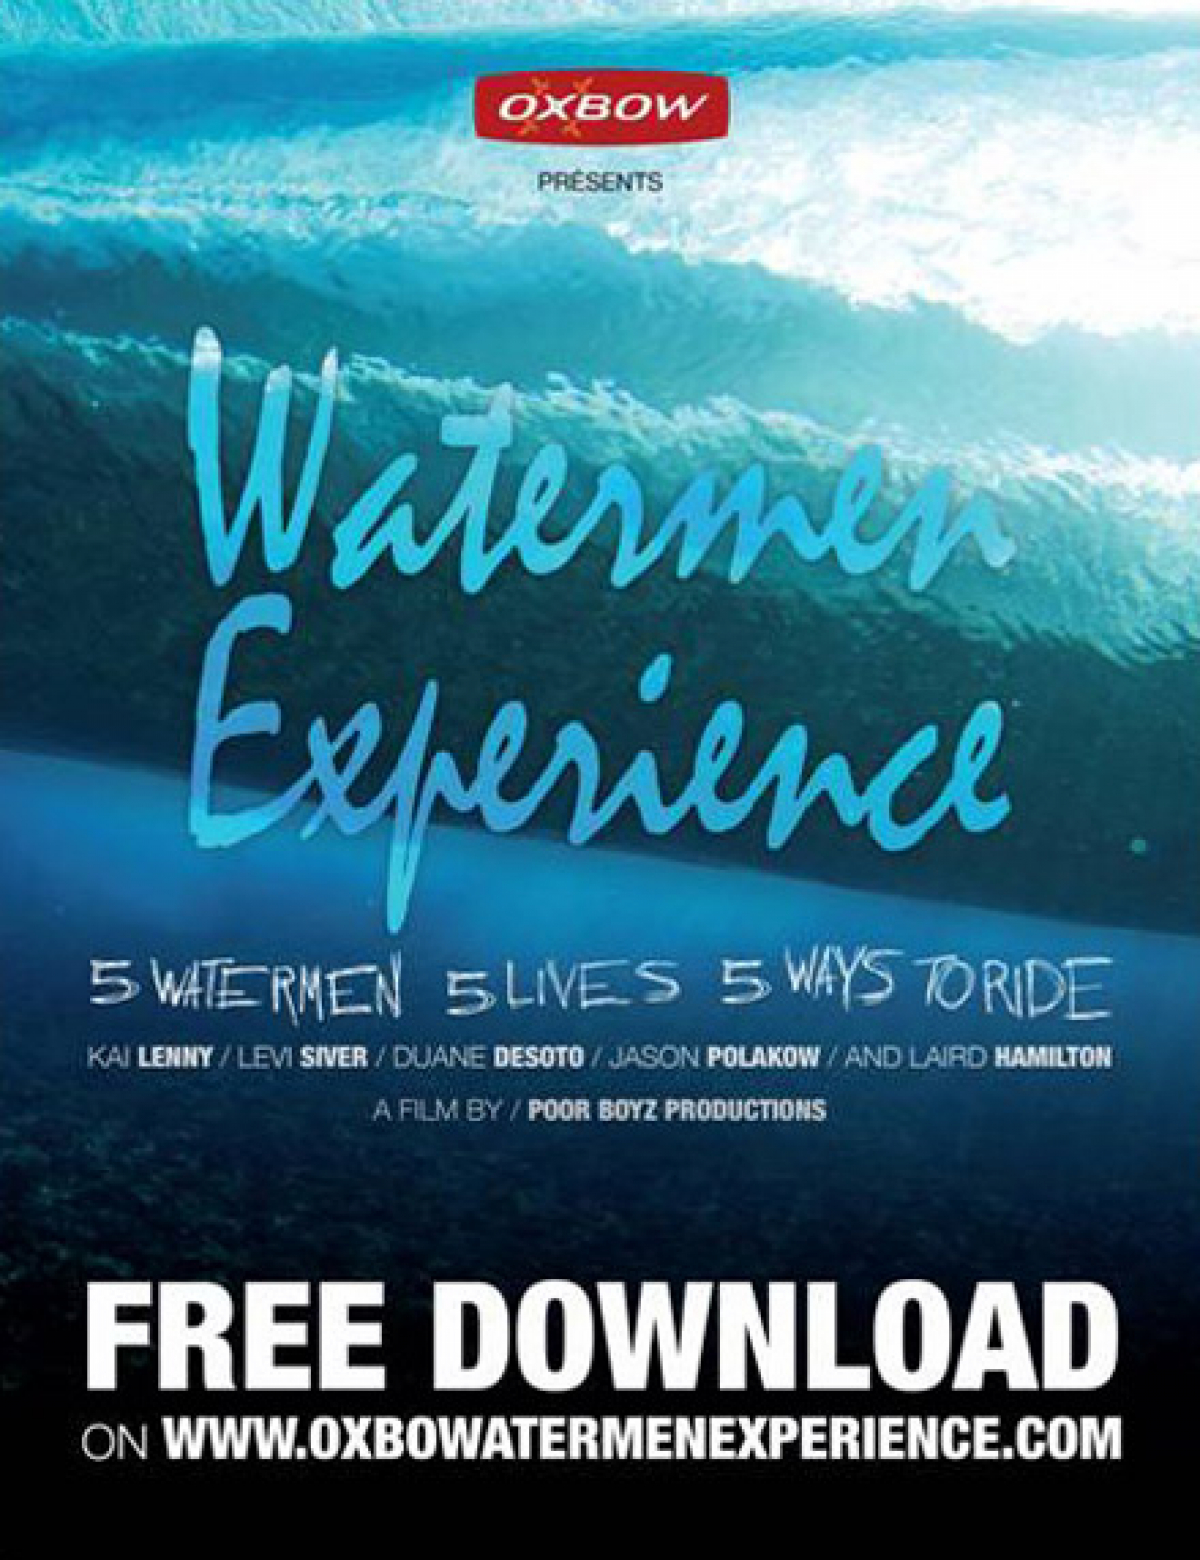 Oxbow Watermen - DVD Download / Update